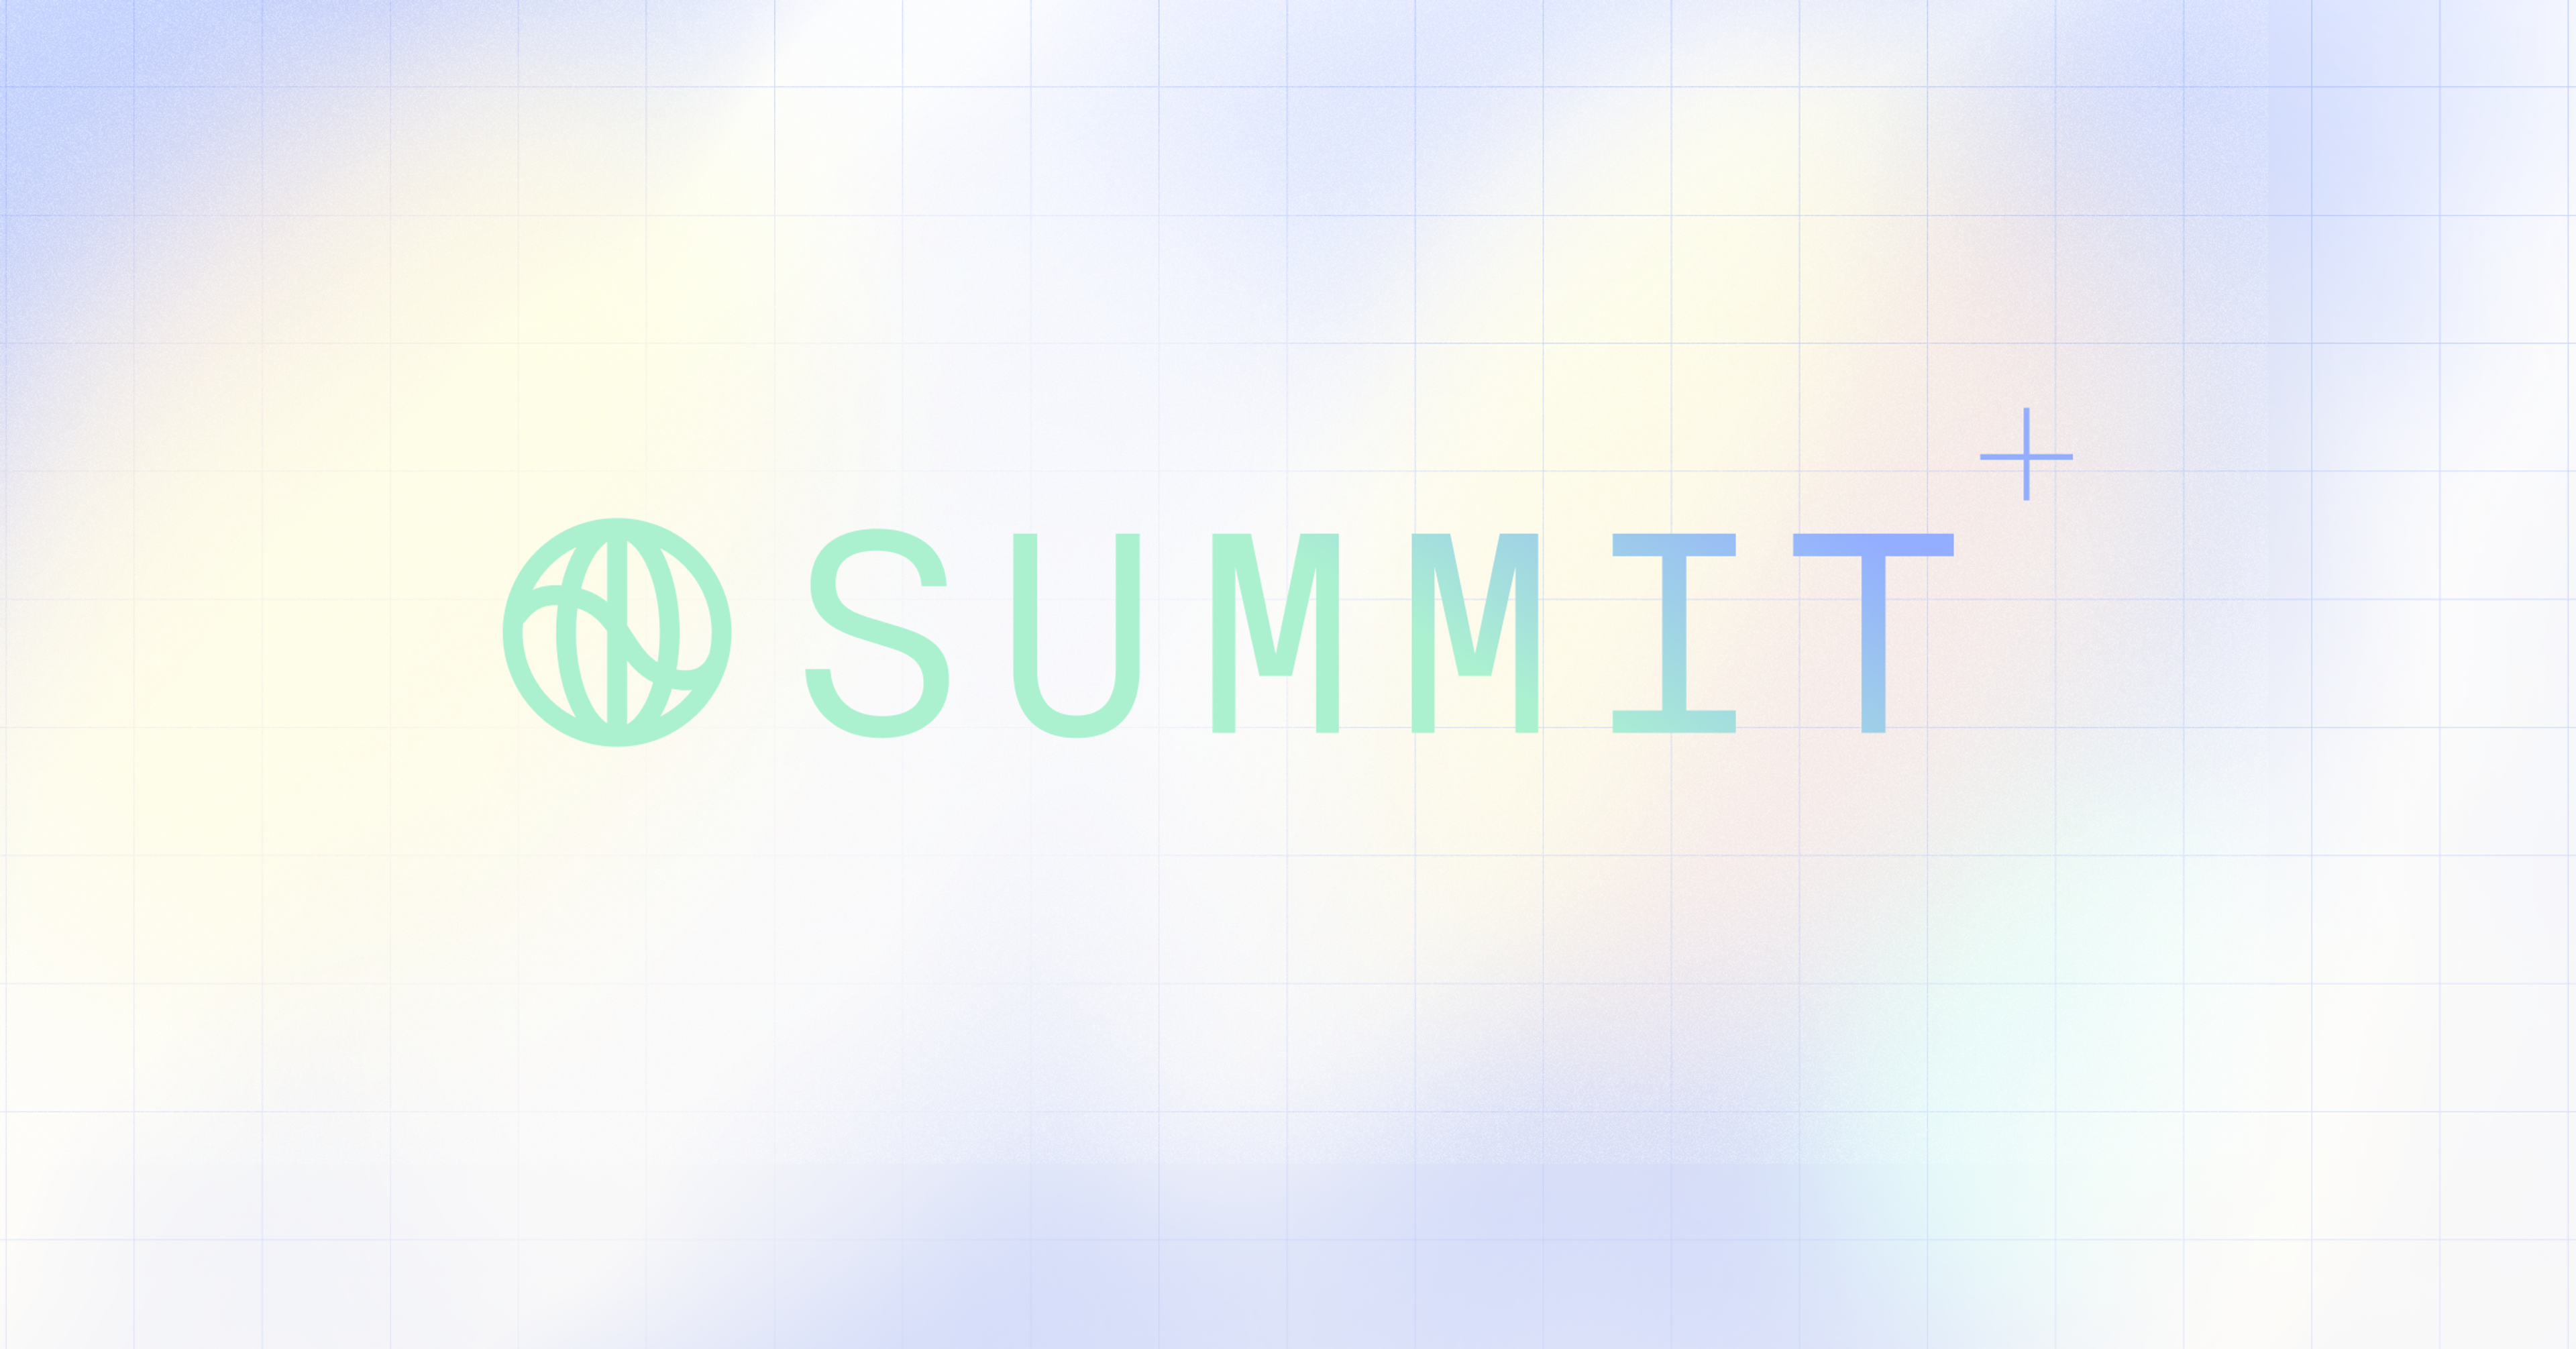 Summit logo over grid texture